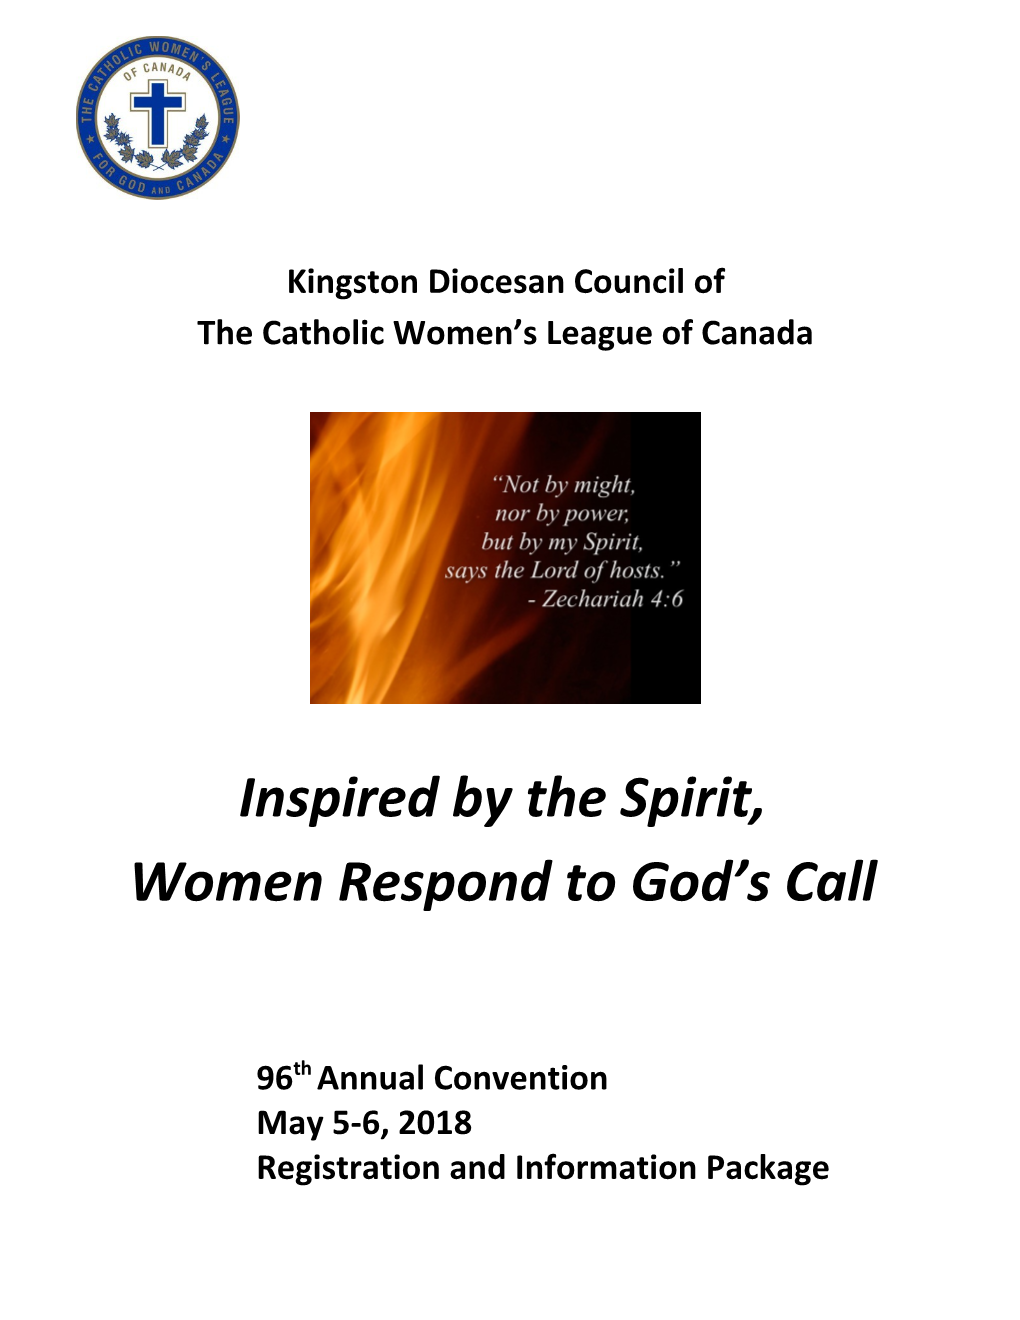 The Catholic Women S League of Canada